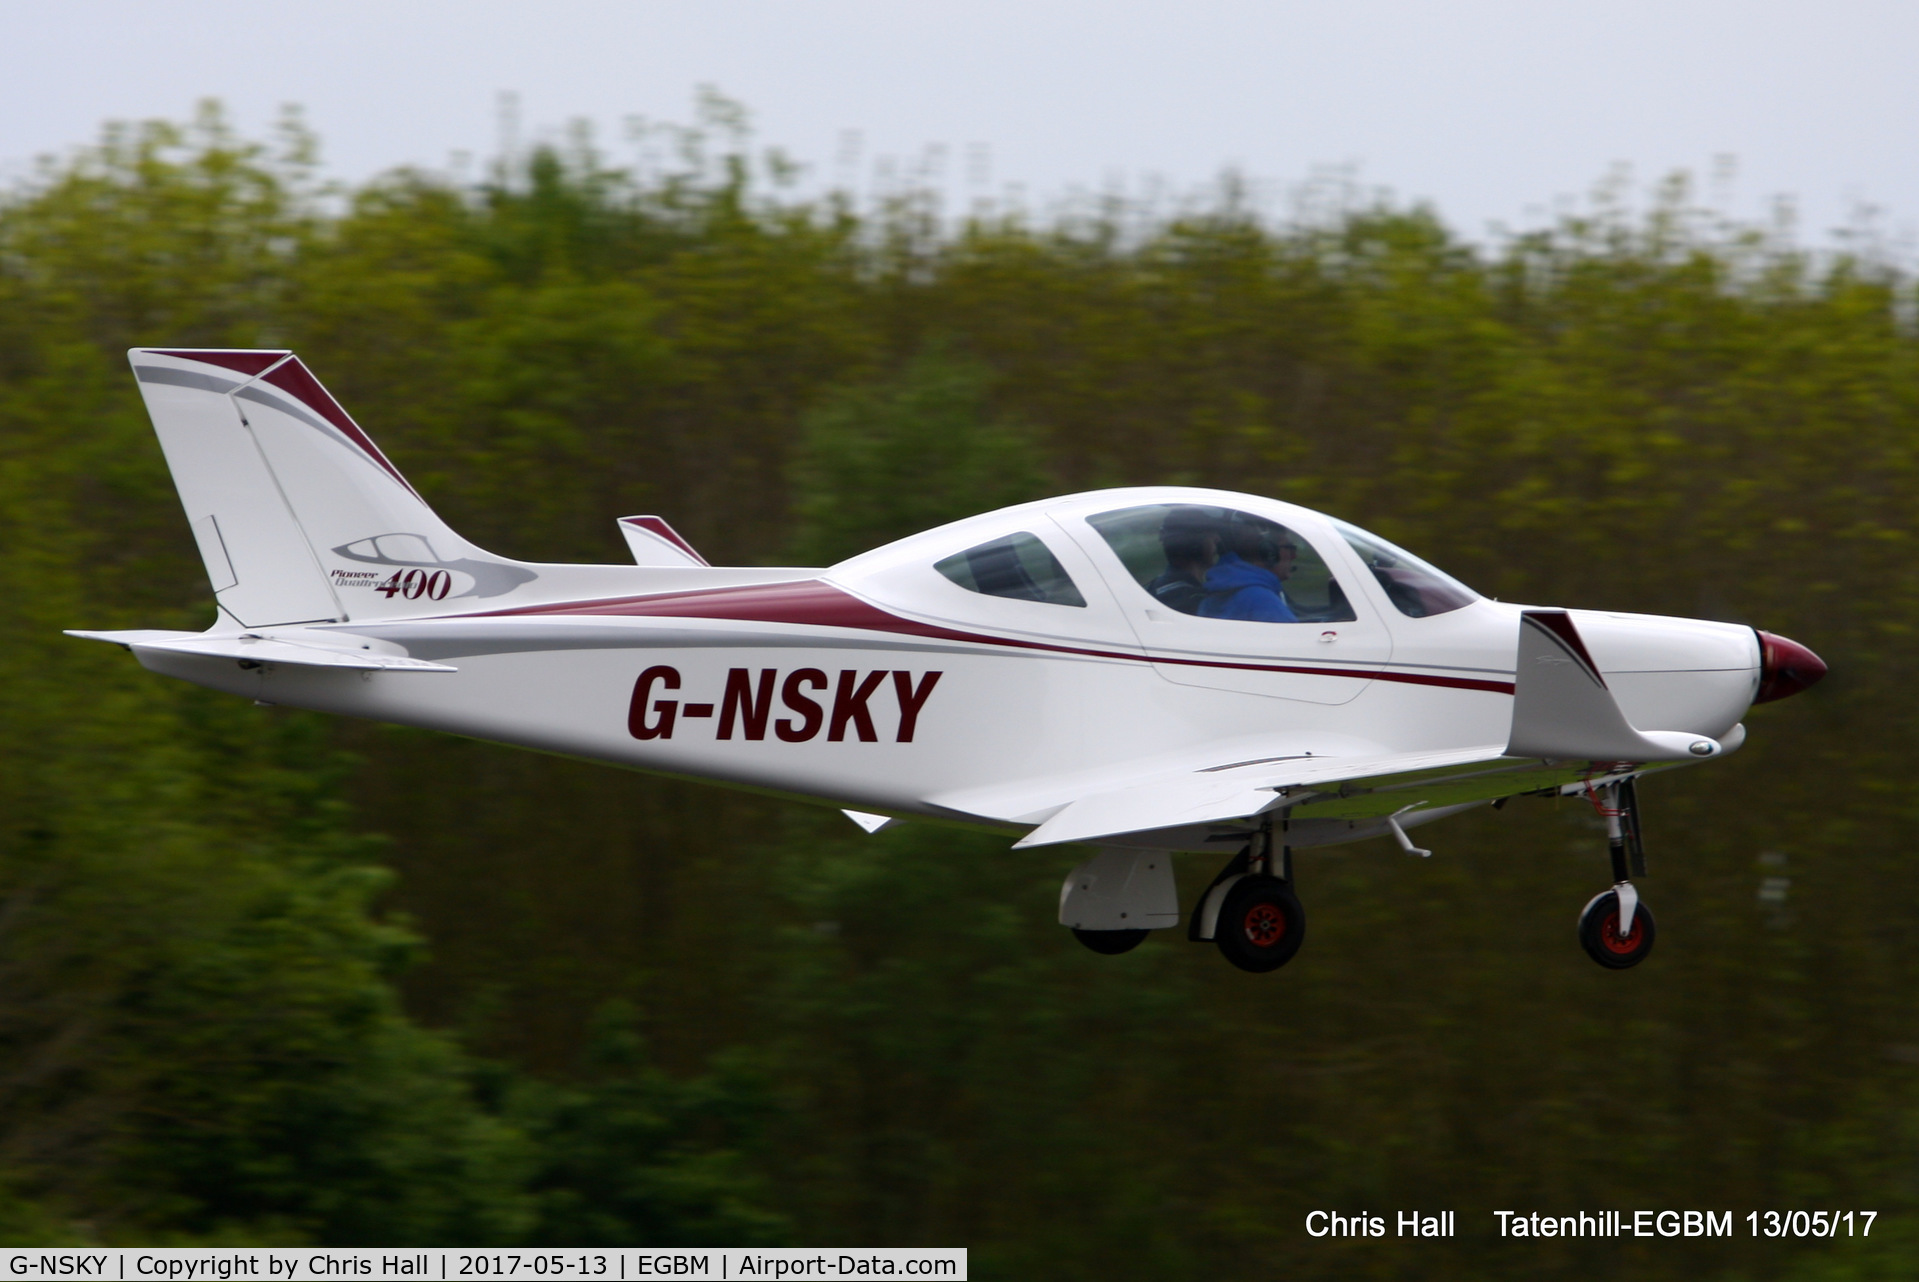 G-NSKY, 2016 Alpi Aviation Pioneer 400 C/N LAA 364-15236, at the Tatenhill 